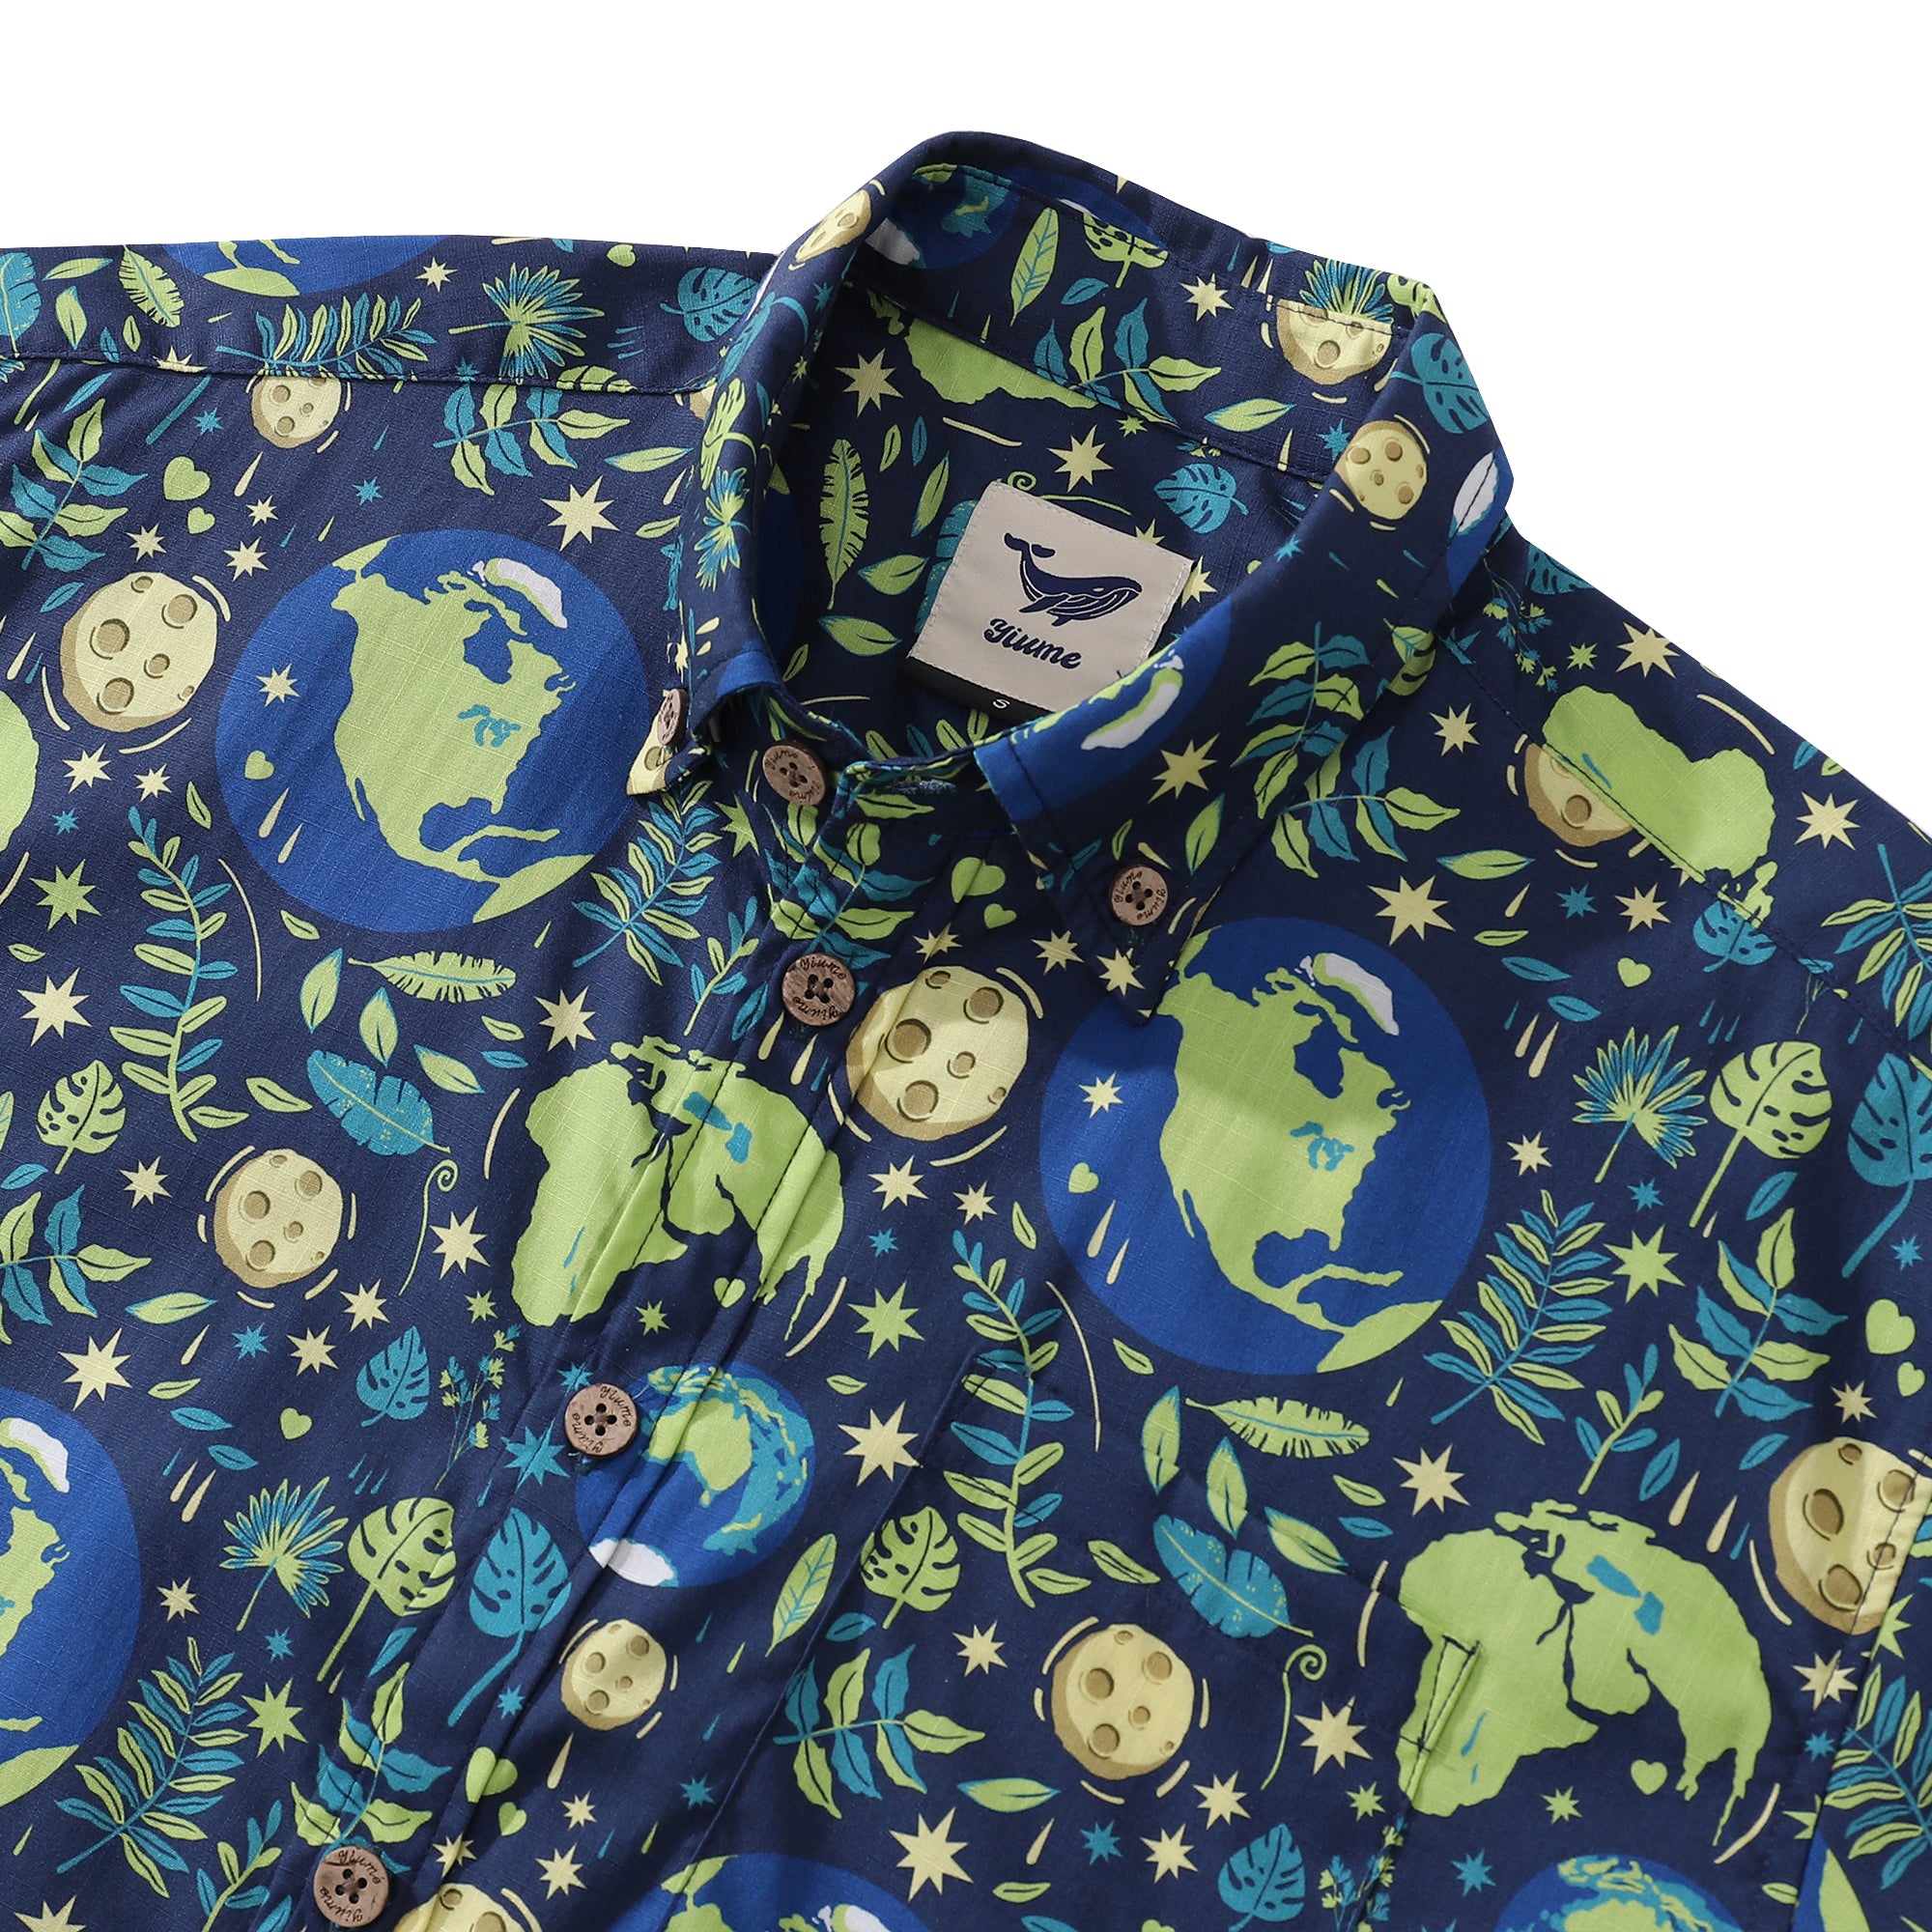 Men's Hawaiian Shirt Blue Planet Earth Day Shirt Cotton Button-down Short Sleeve Aloha Shirt